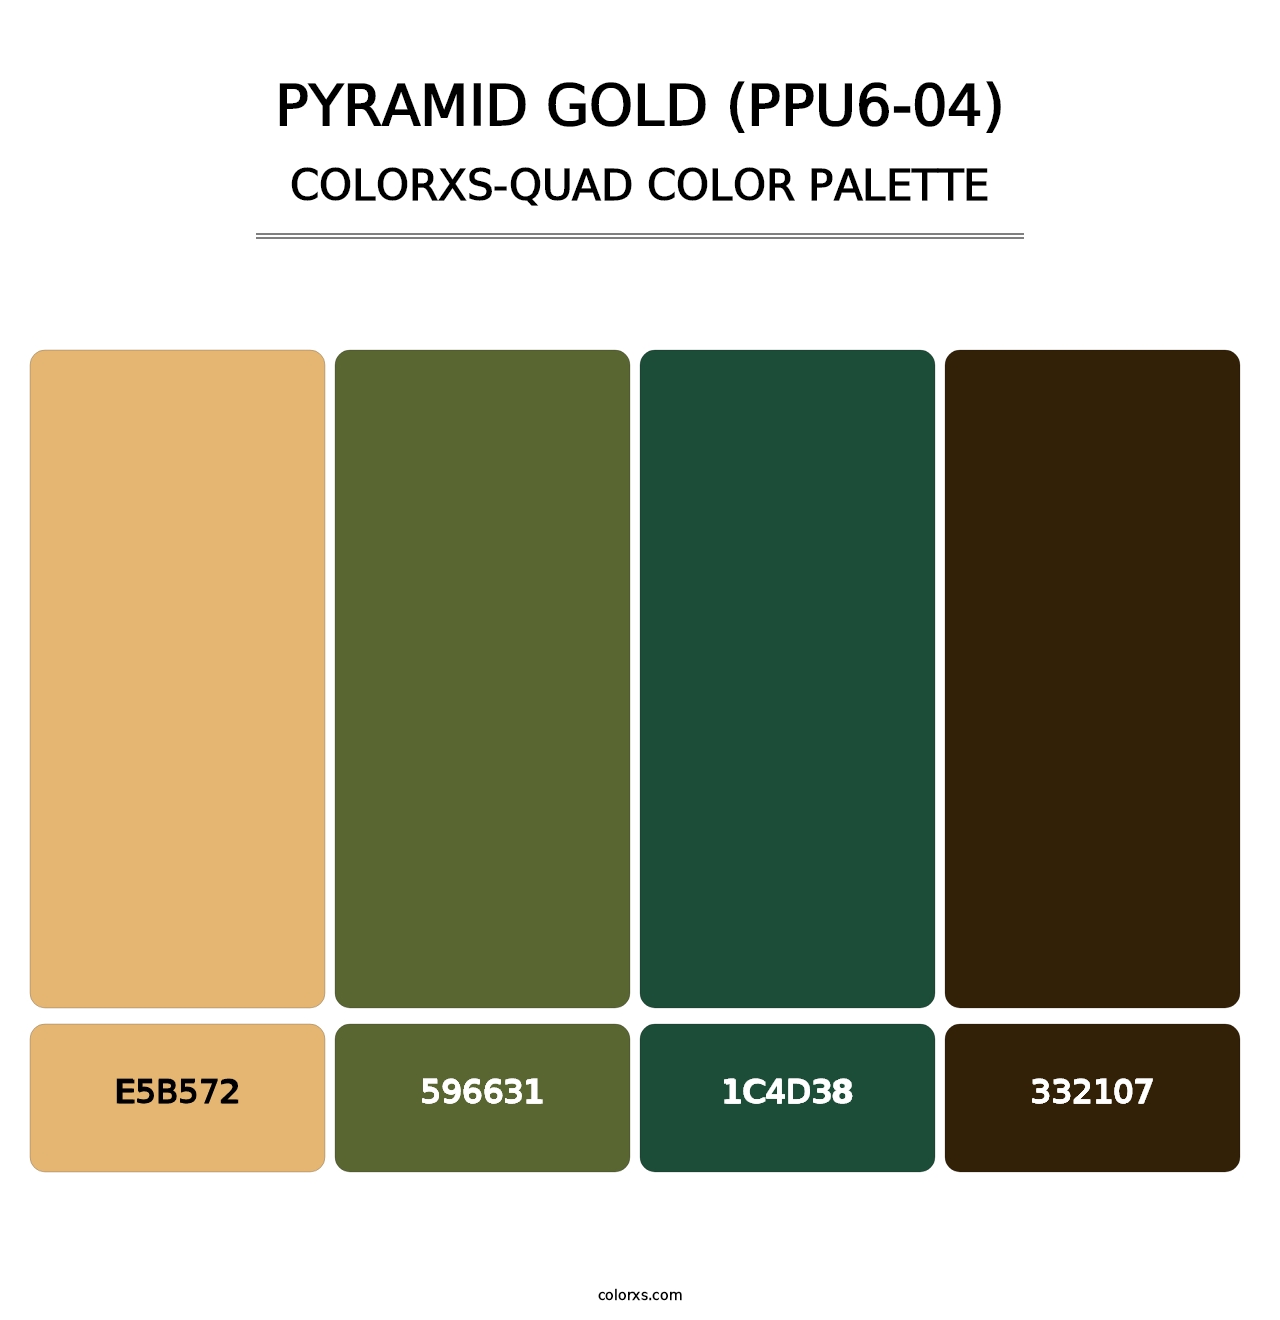 Pyramid Gold (PPU6-04) - Colorxs Quad Palette